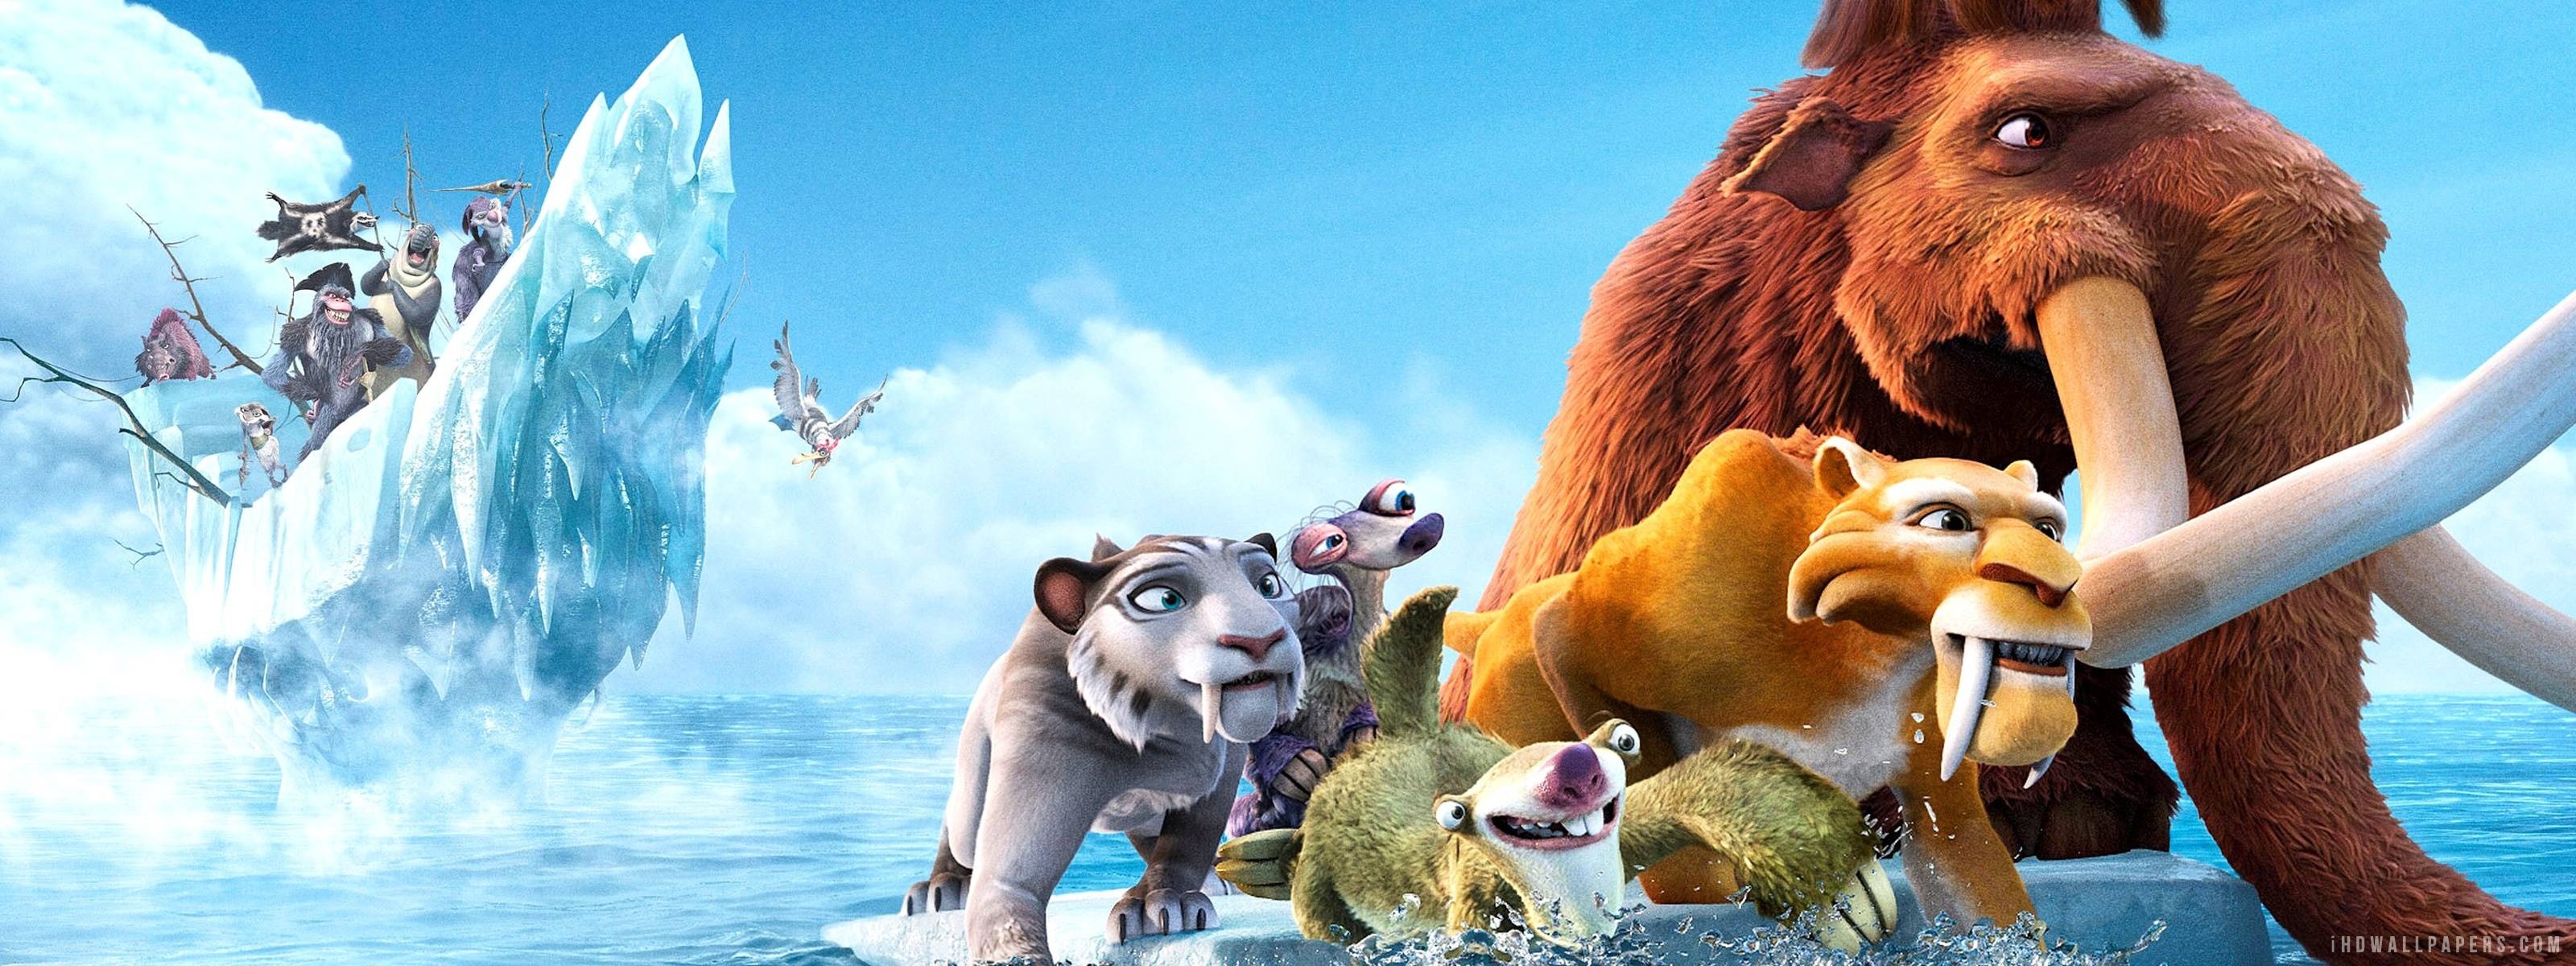 Ice Age Movie, Wallpaper, 3200x1200 Dual Screen Desktop